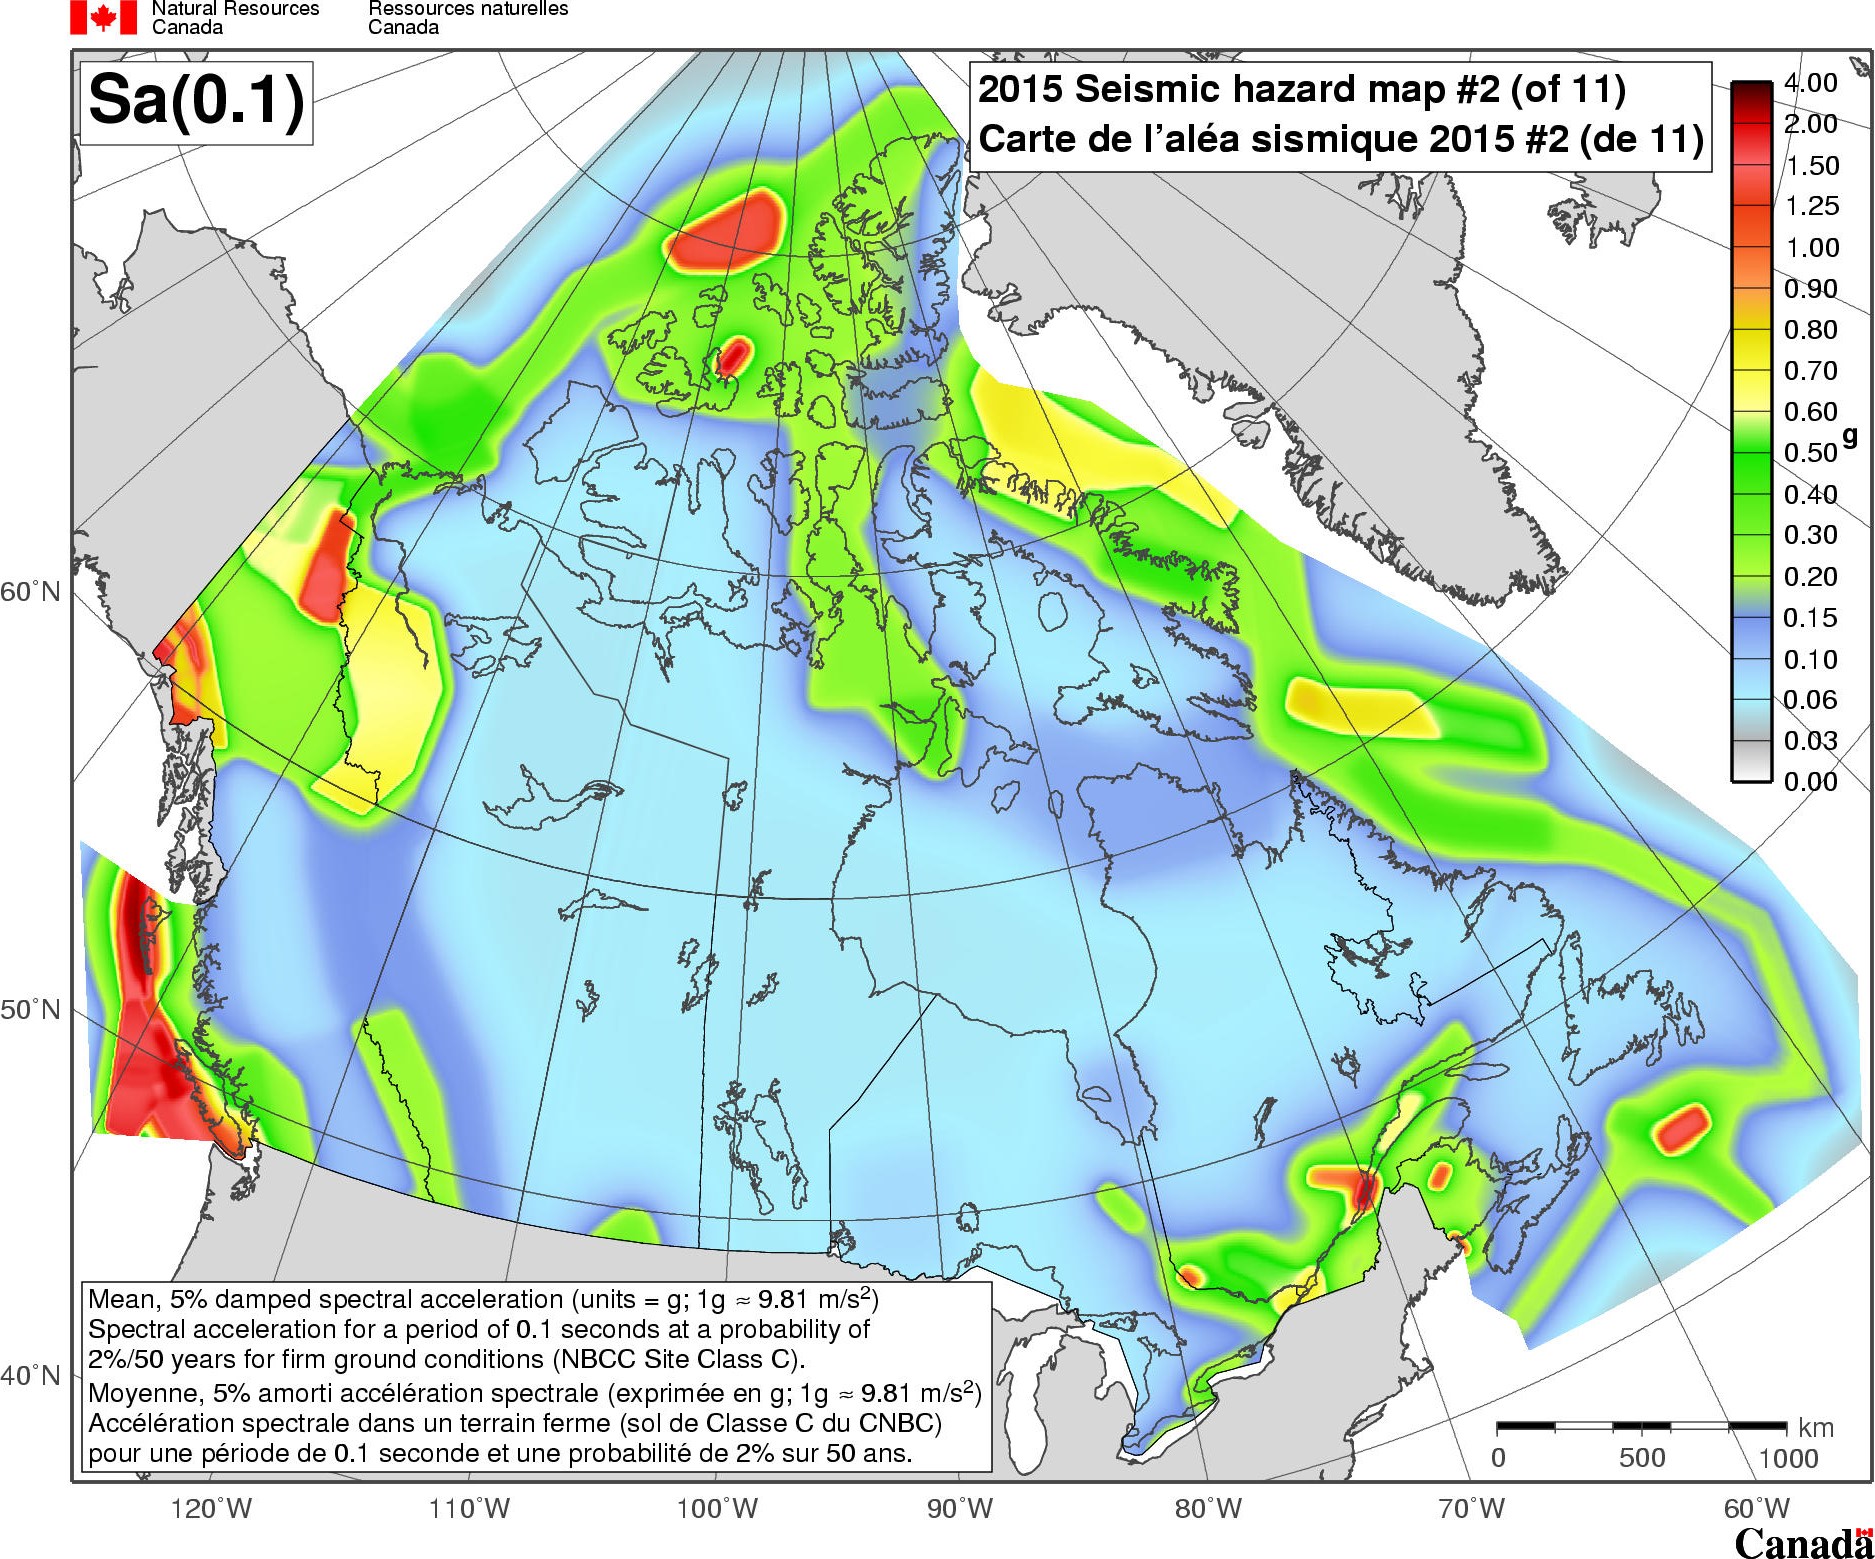 2015 NBCC seismic hazard map - Sa(0.1)